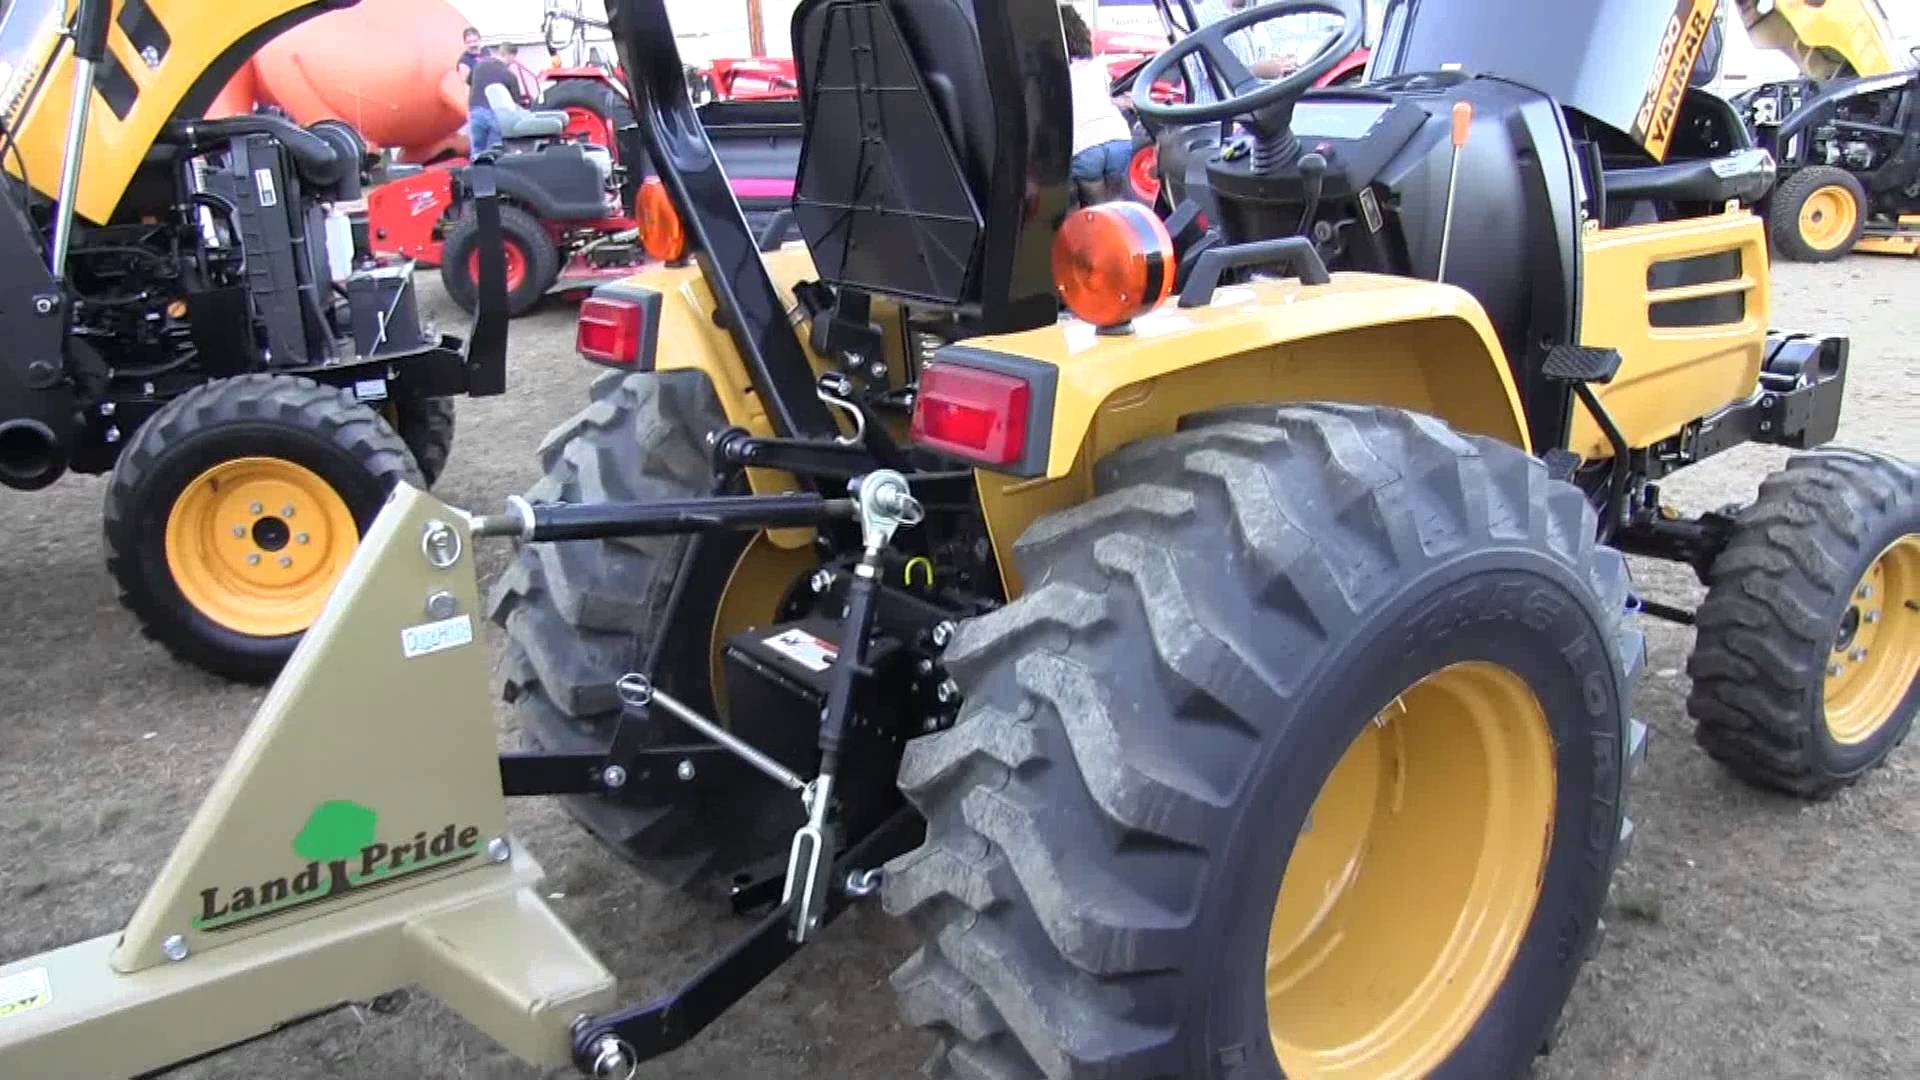 Yanmar EX3200 Tractor and Land Pride rake - YouTube